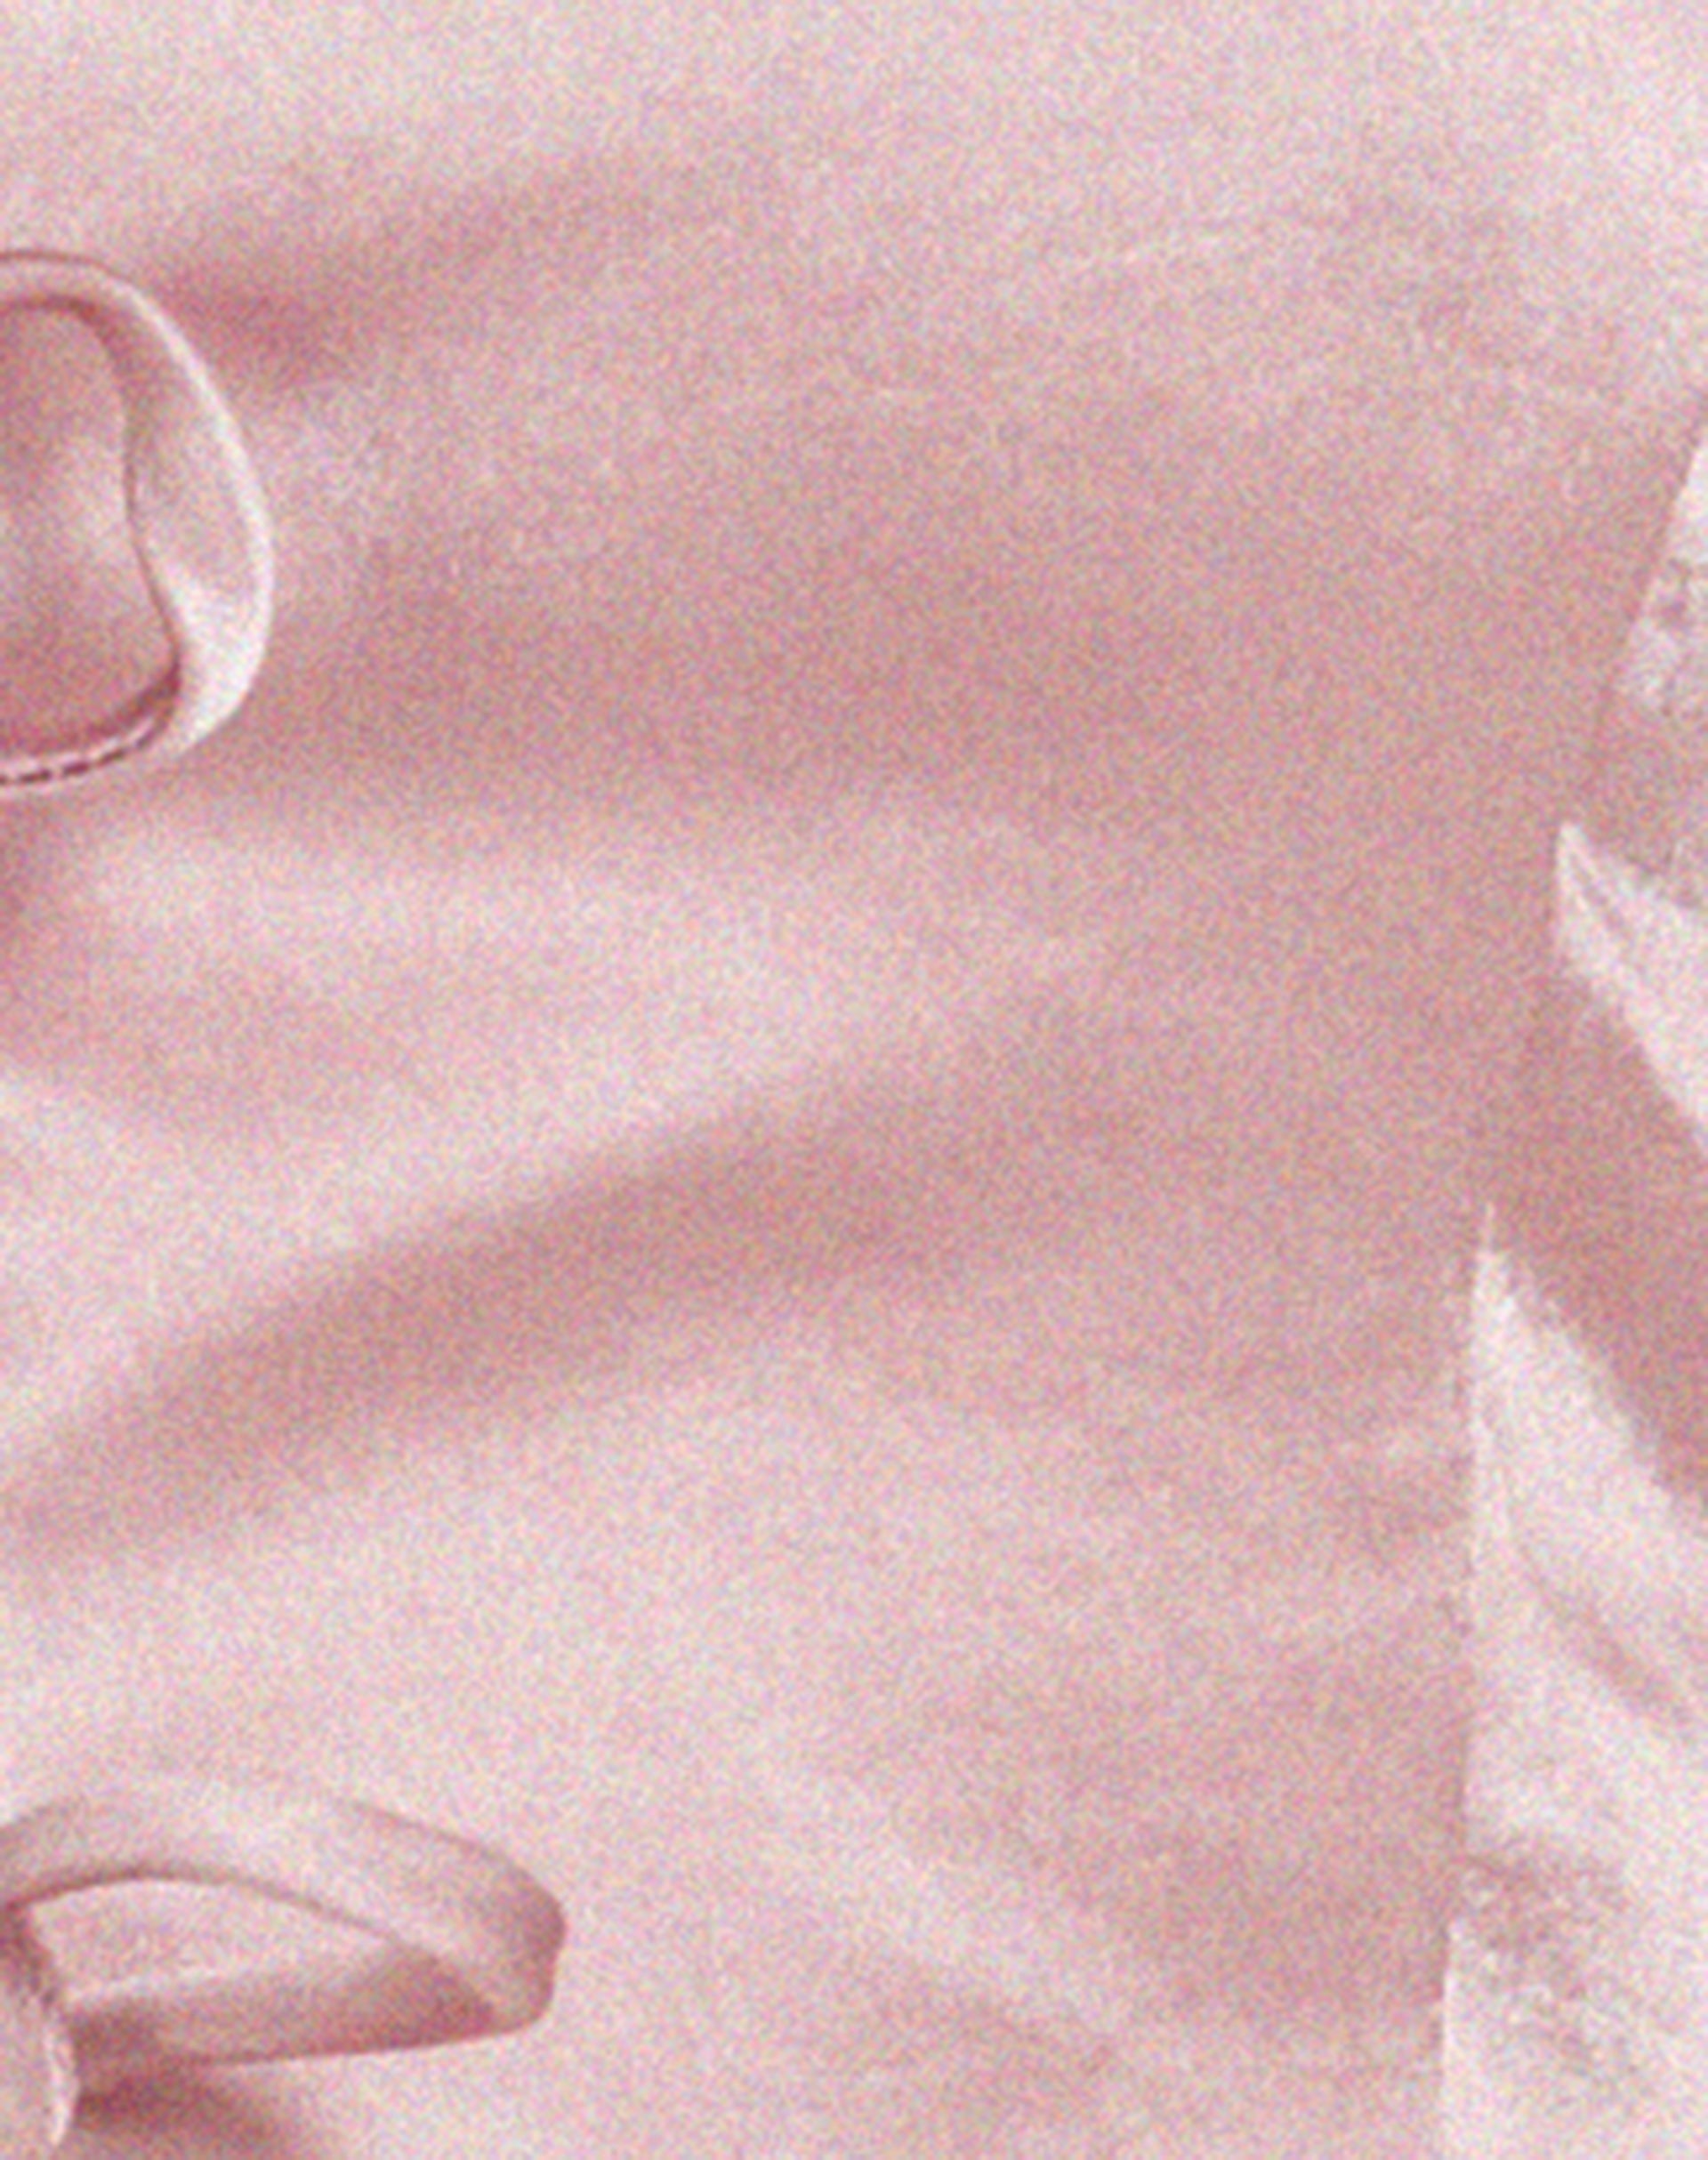 Pink Zip Through Jacket  Talisa – motelrocks-com-us